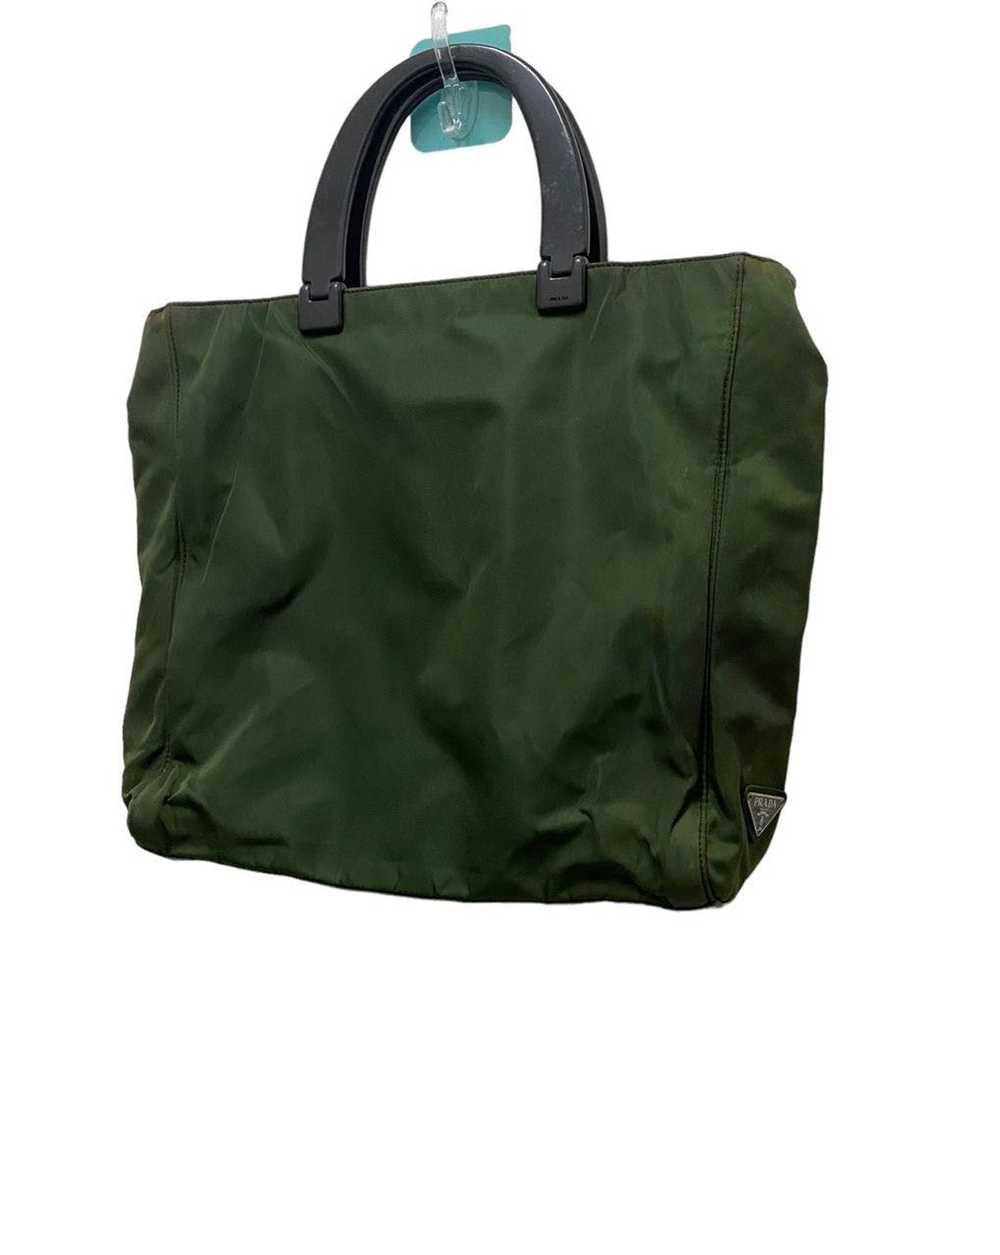 Prada Prada plastic handle handbag nylon - image 5